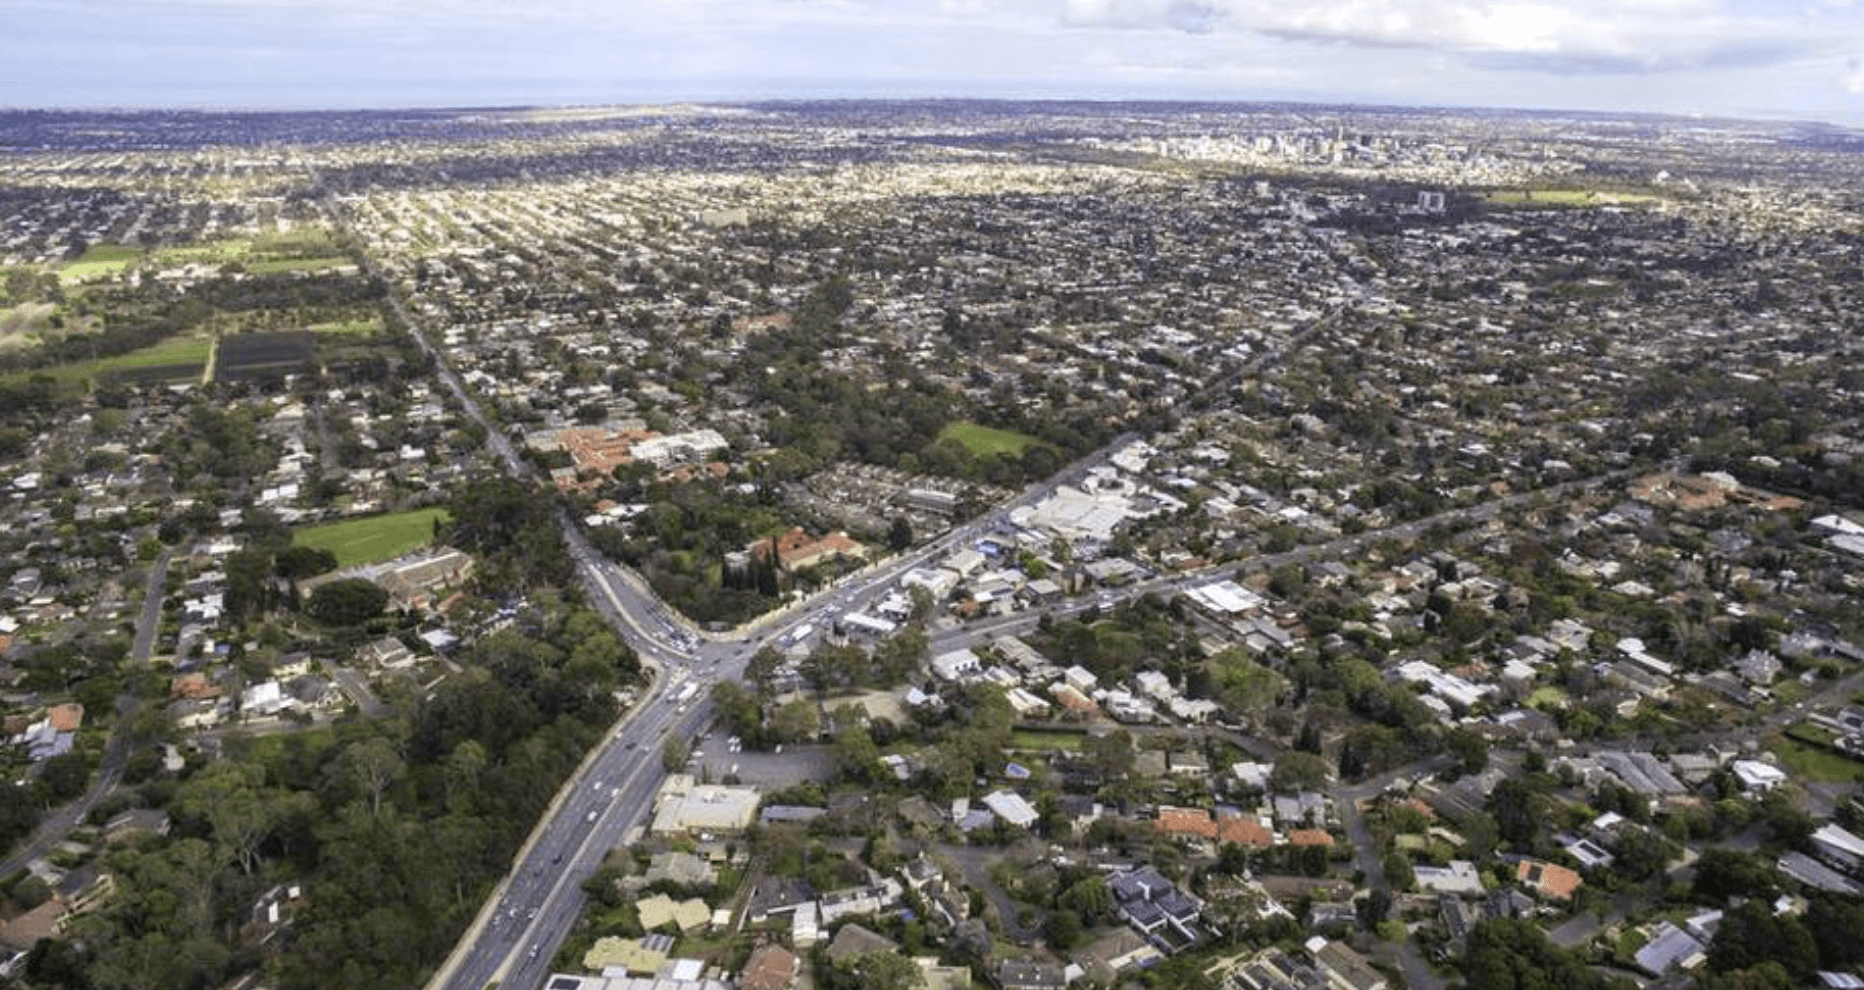 Aerial shot of a suburban area.